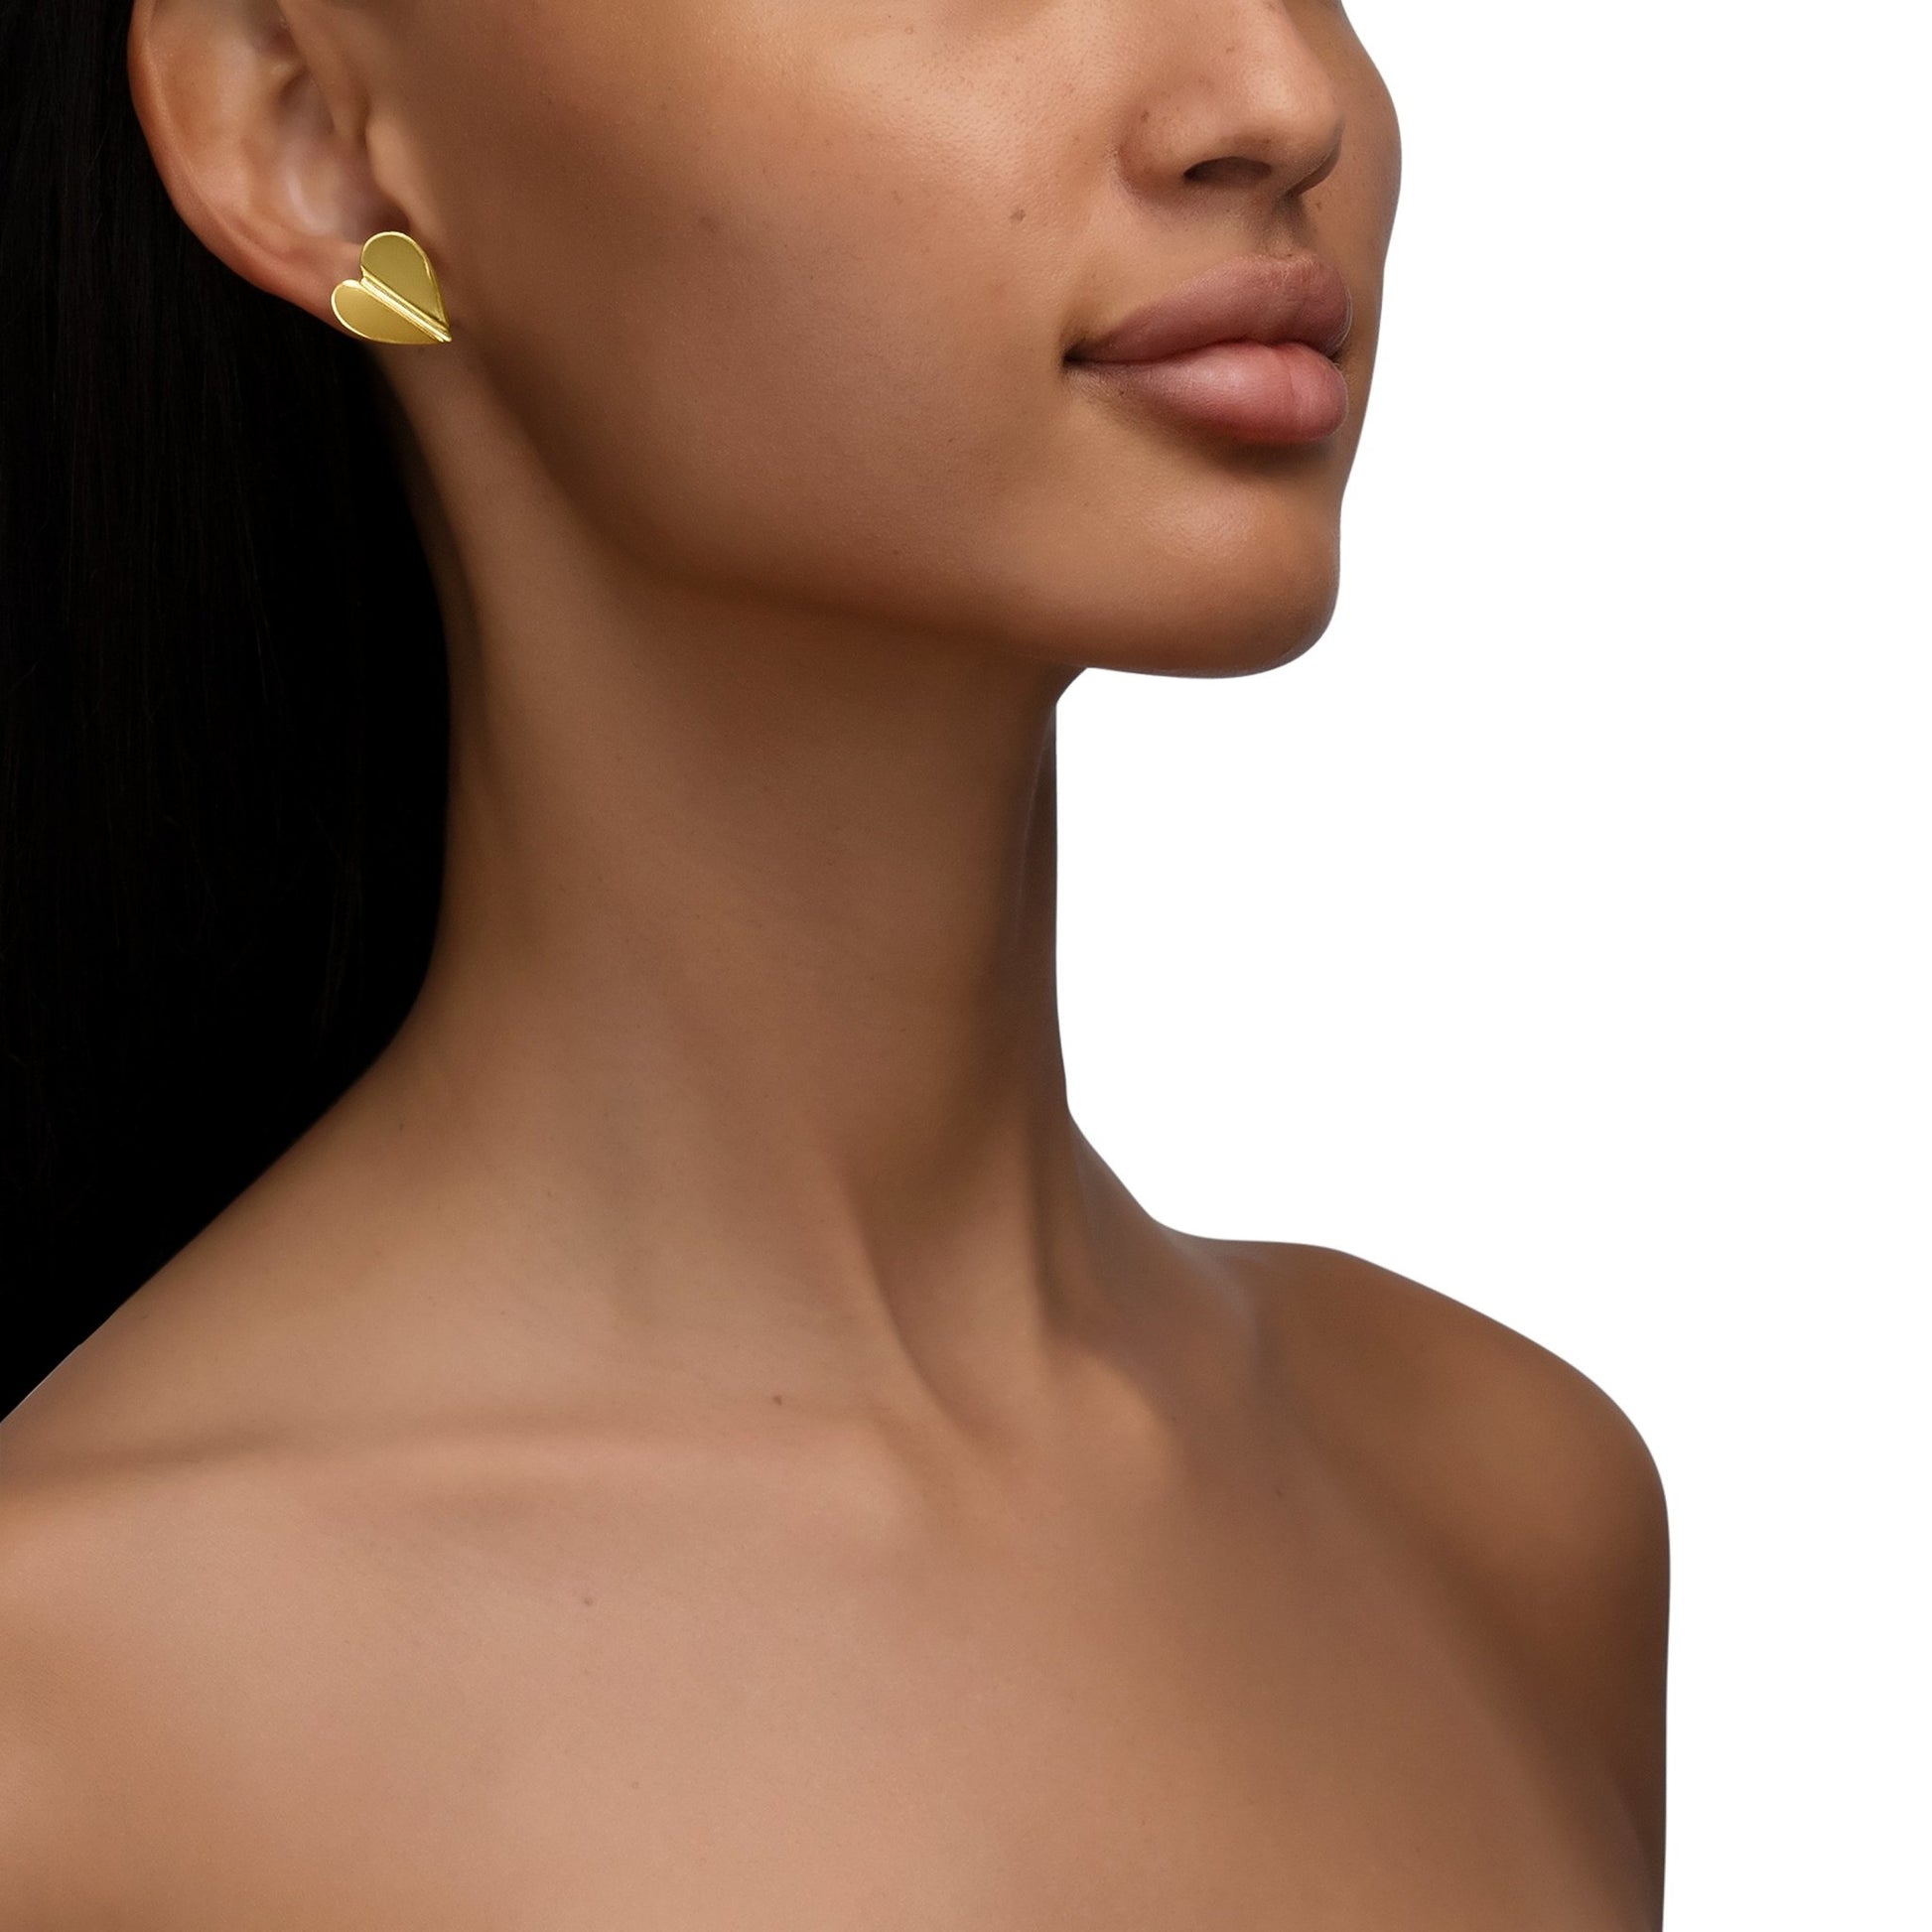 Large Yellow Gold Wings of Love Folded Stud Earrings - Cadar